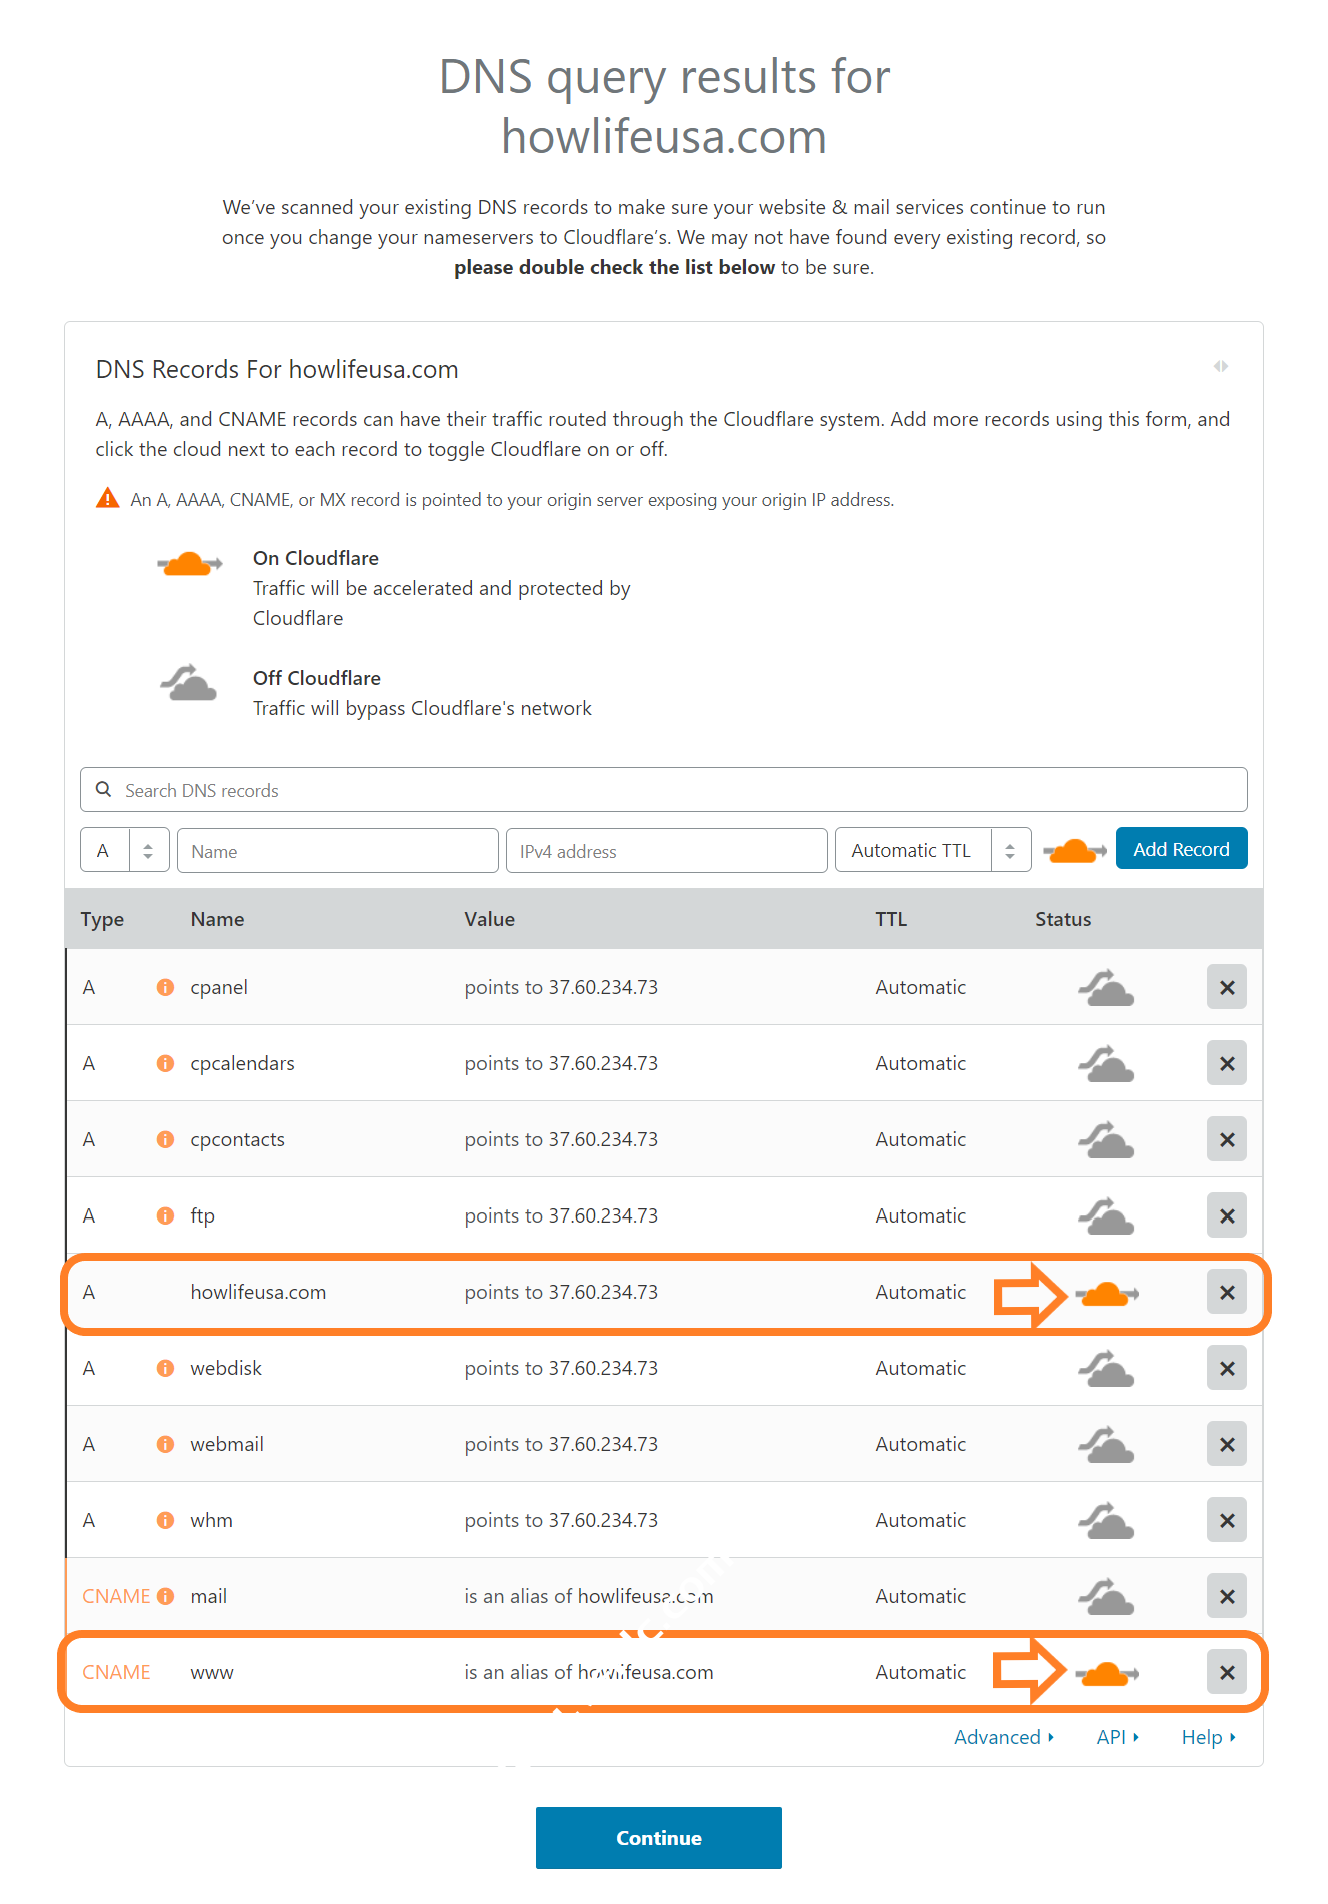 Cloudflare：免费为您的网站提供DNS安全保护和CDN加速服务